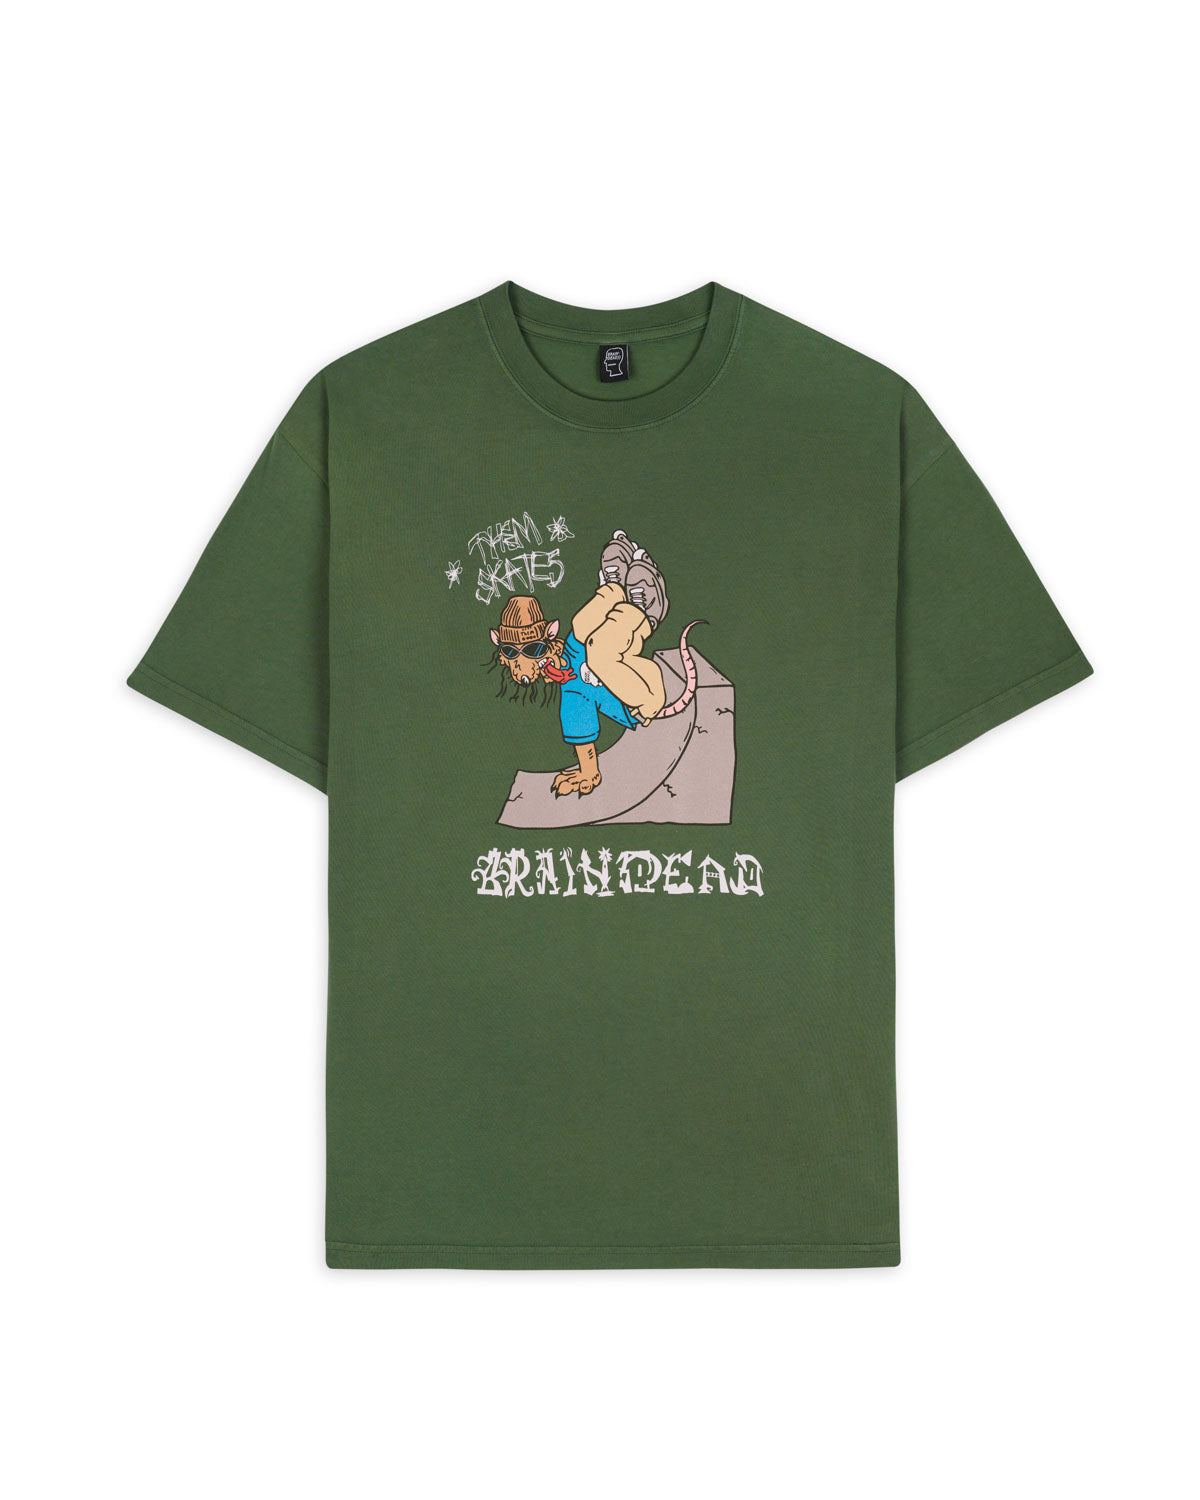 Inverted Rat T-Shirt - Green 1